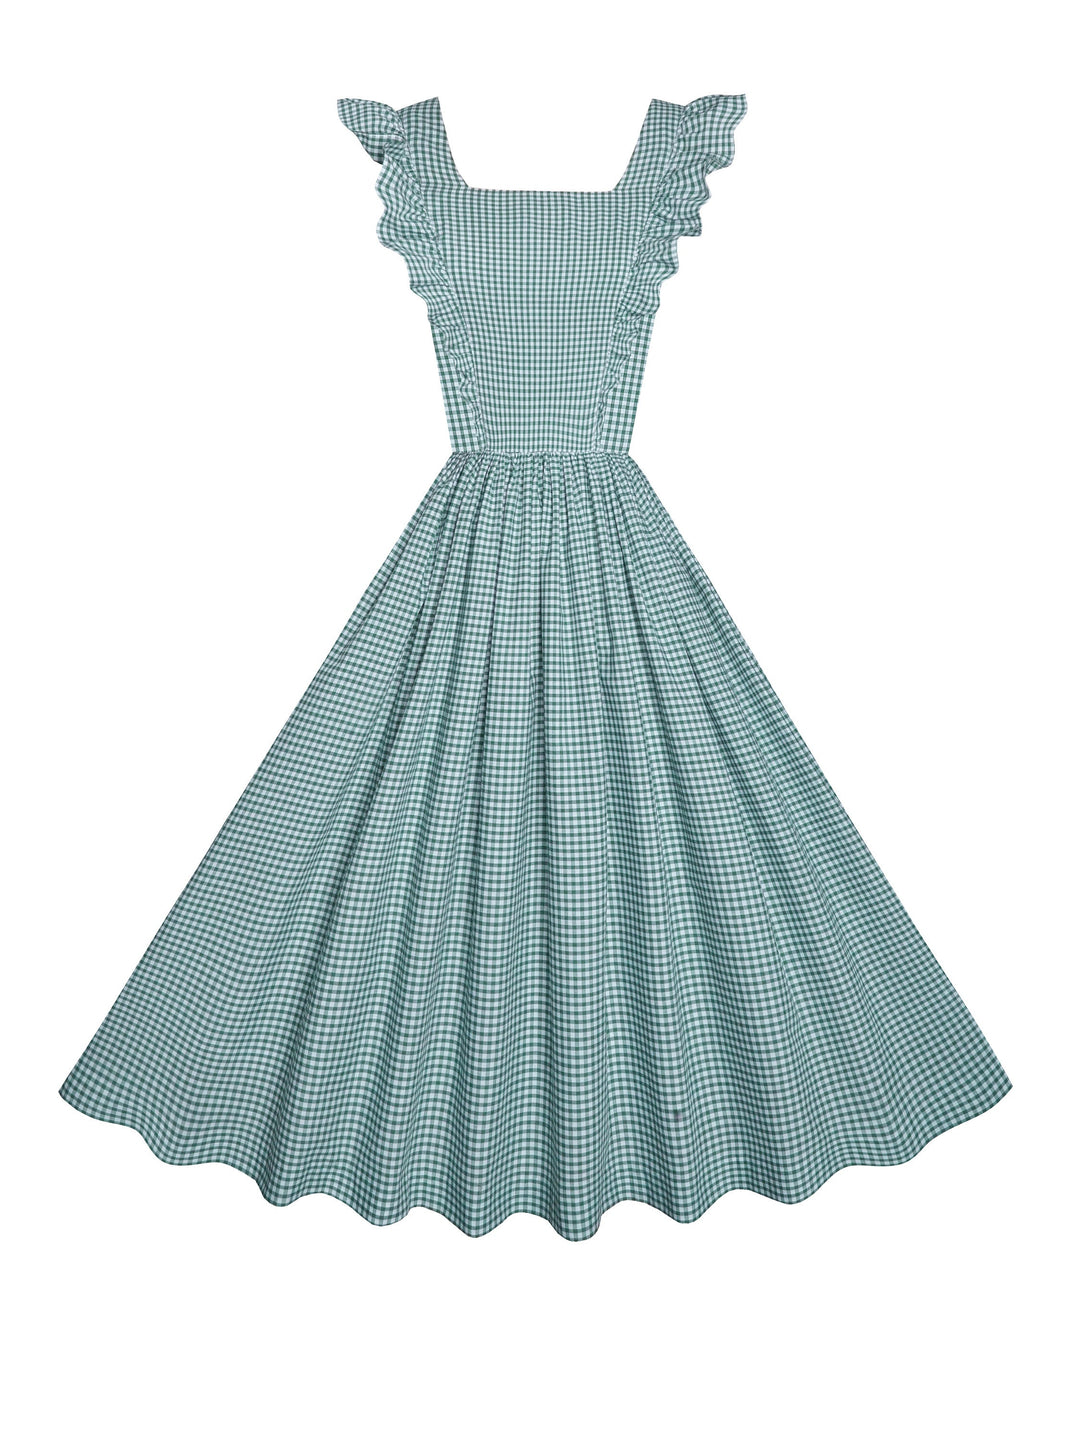 MTO - Lorraine Dress Pine Green Gingham - Small Checks